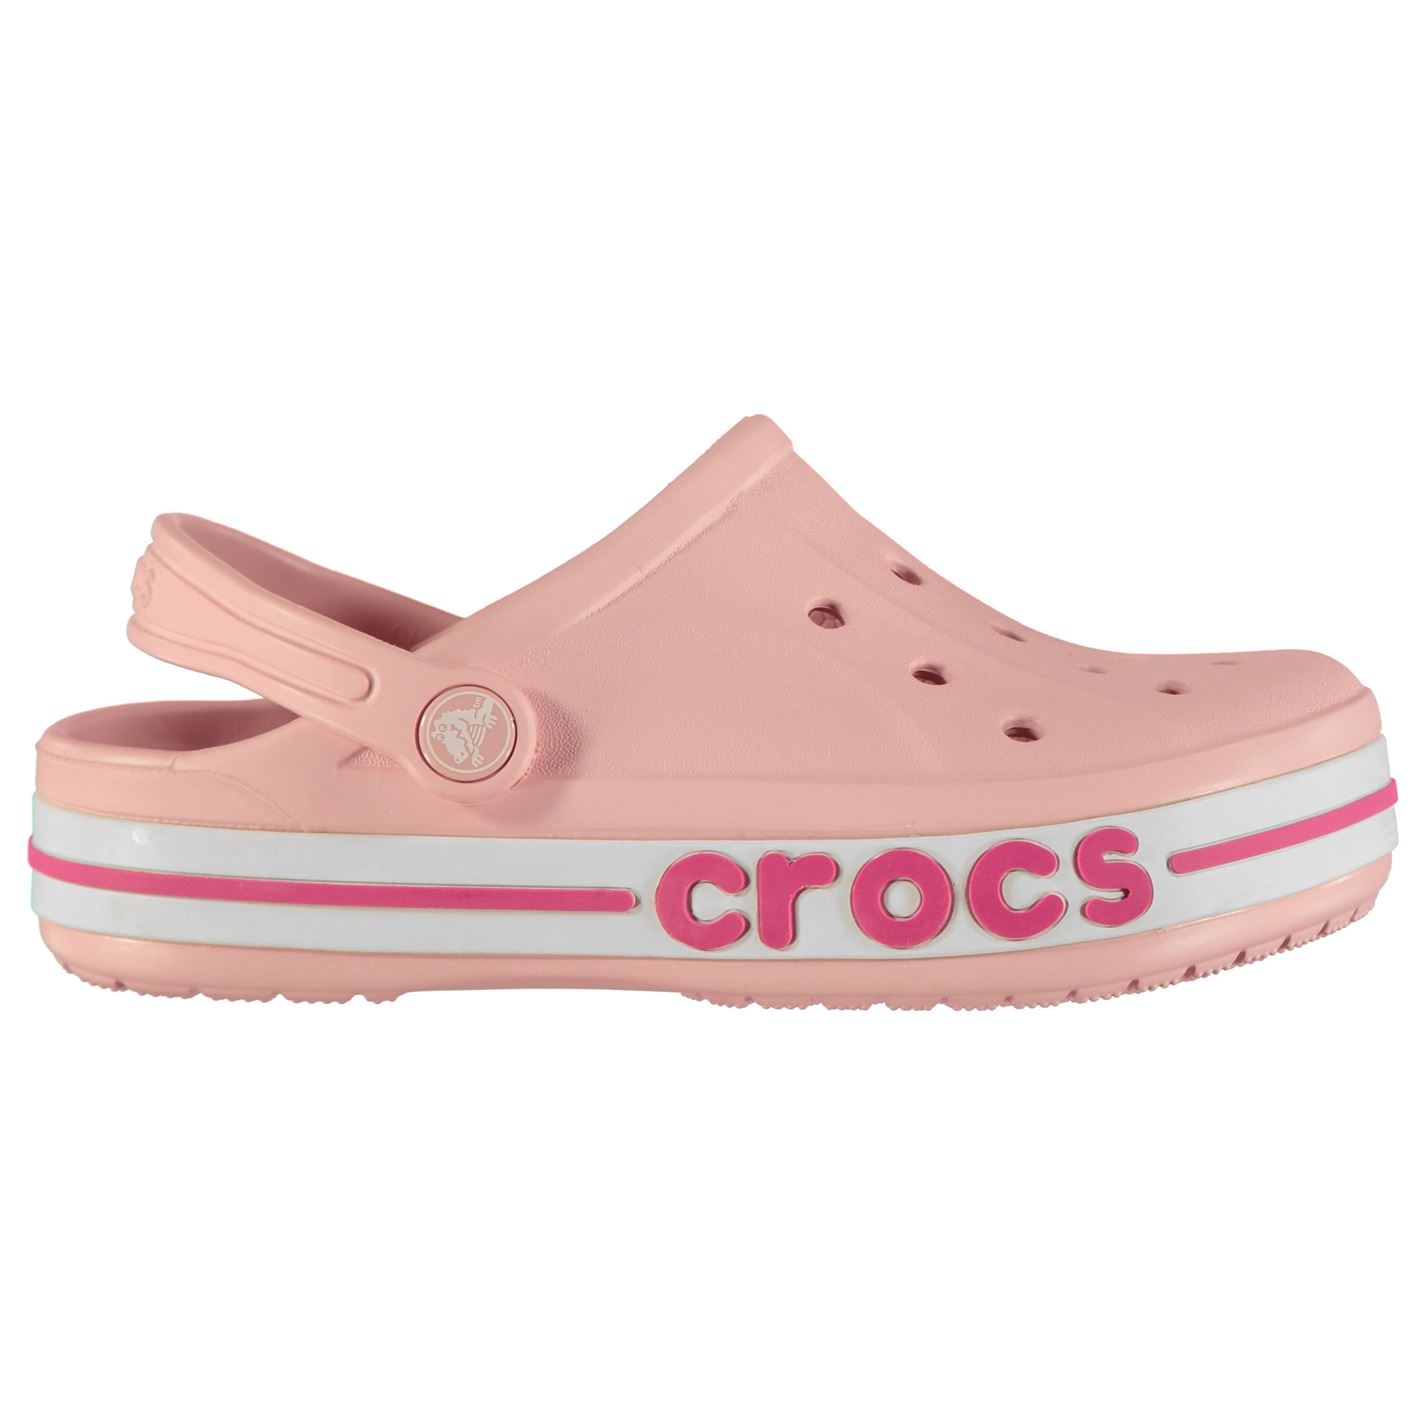 Crocs Baya Band Childrens Sandals